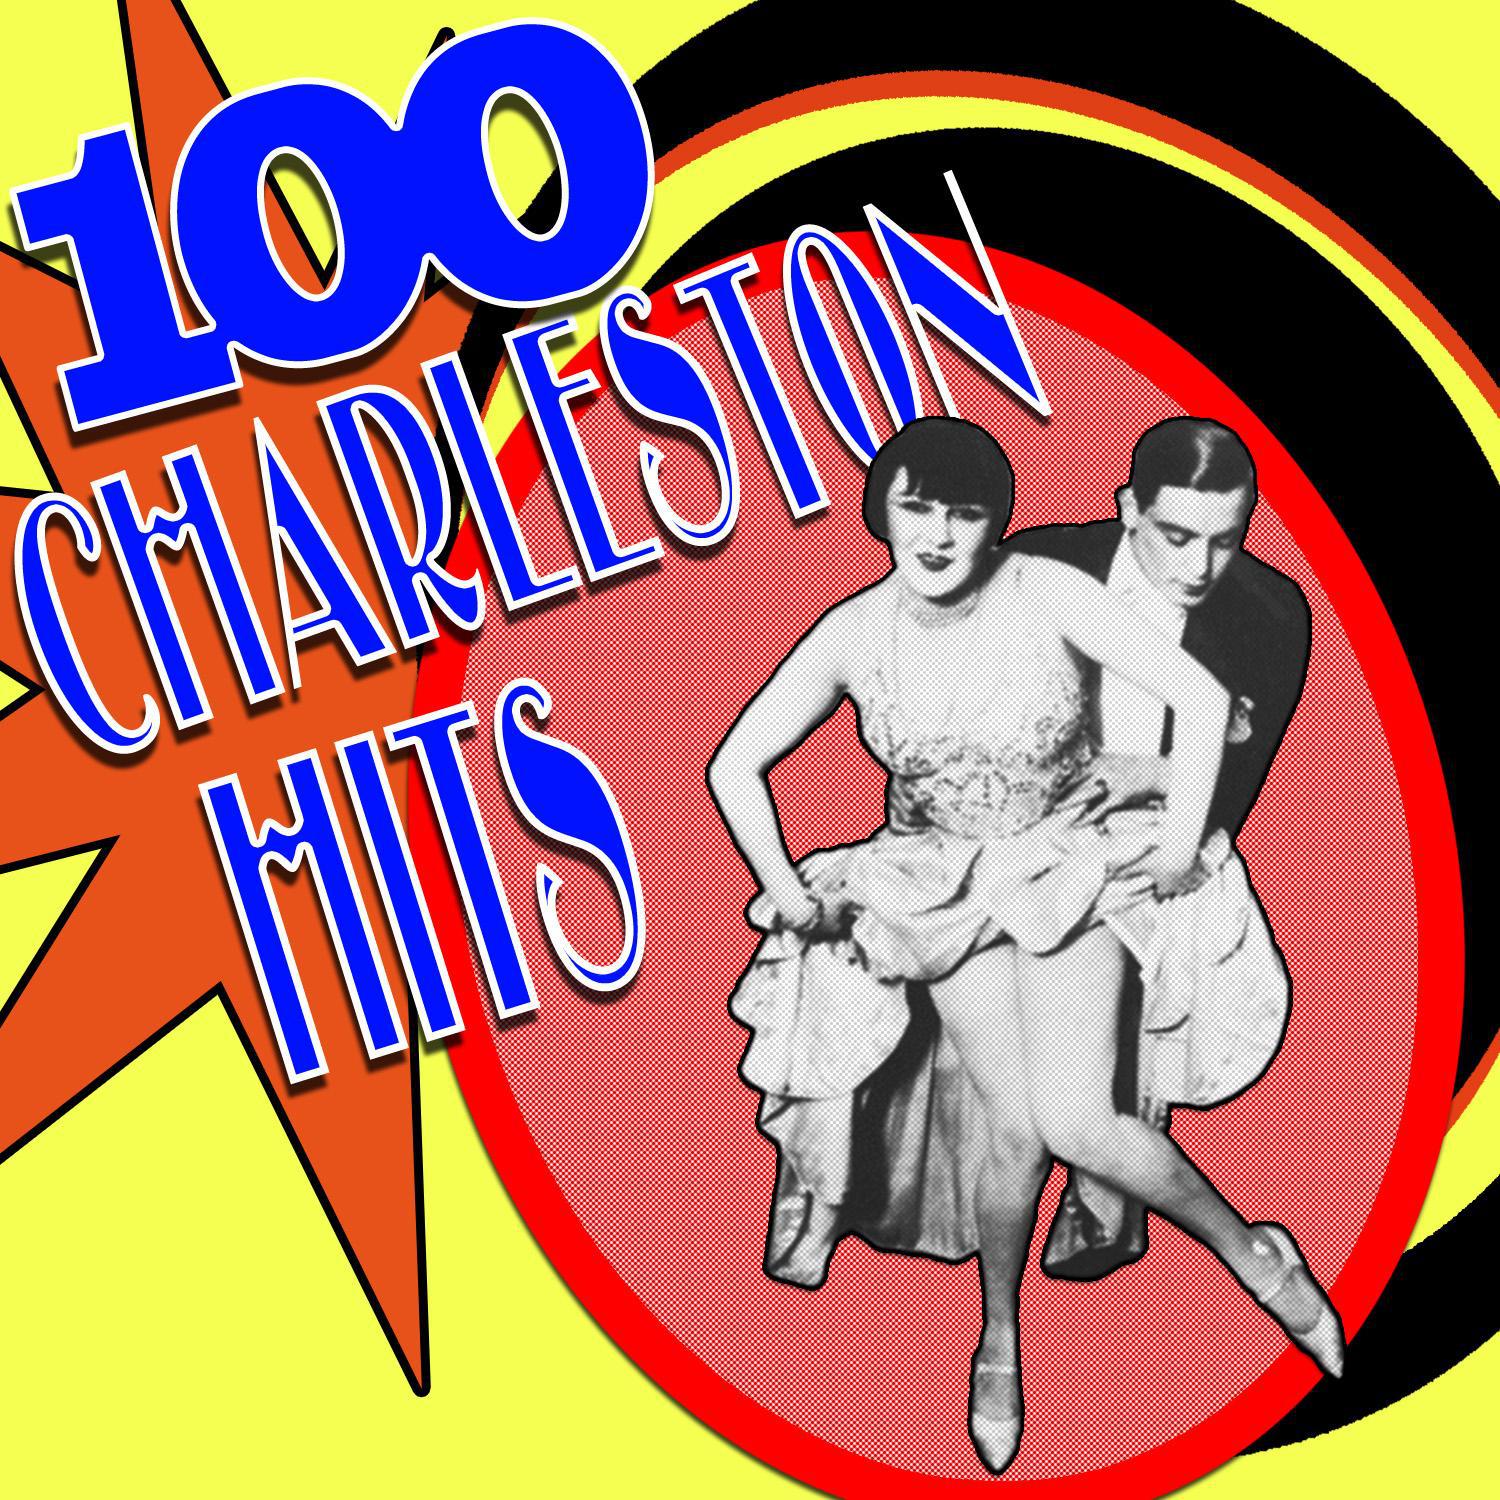 100 Charleston Classics